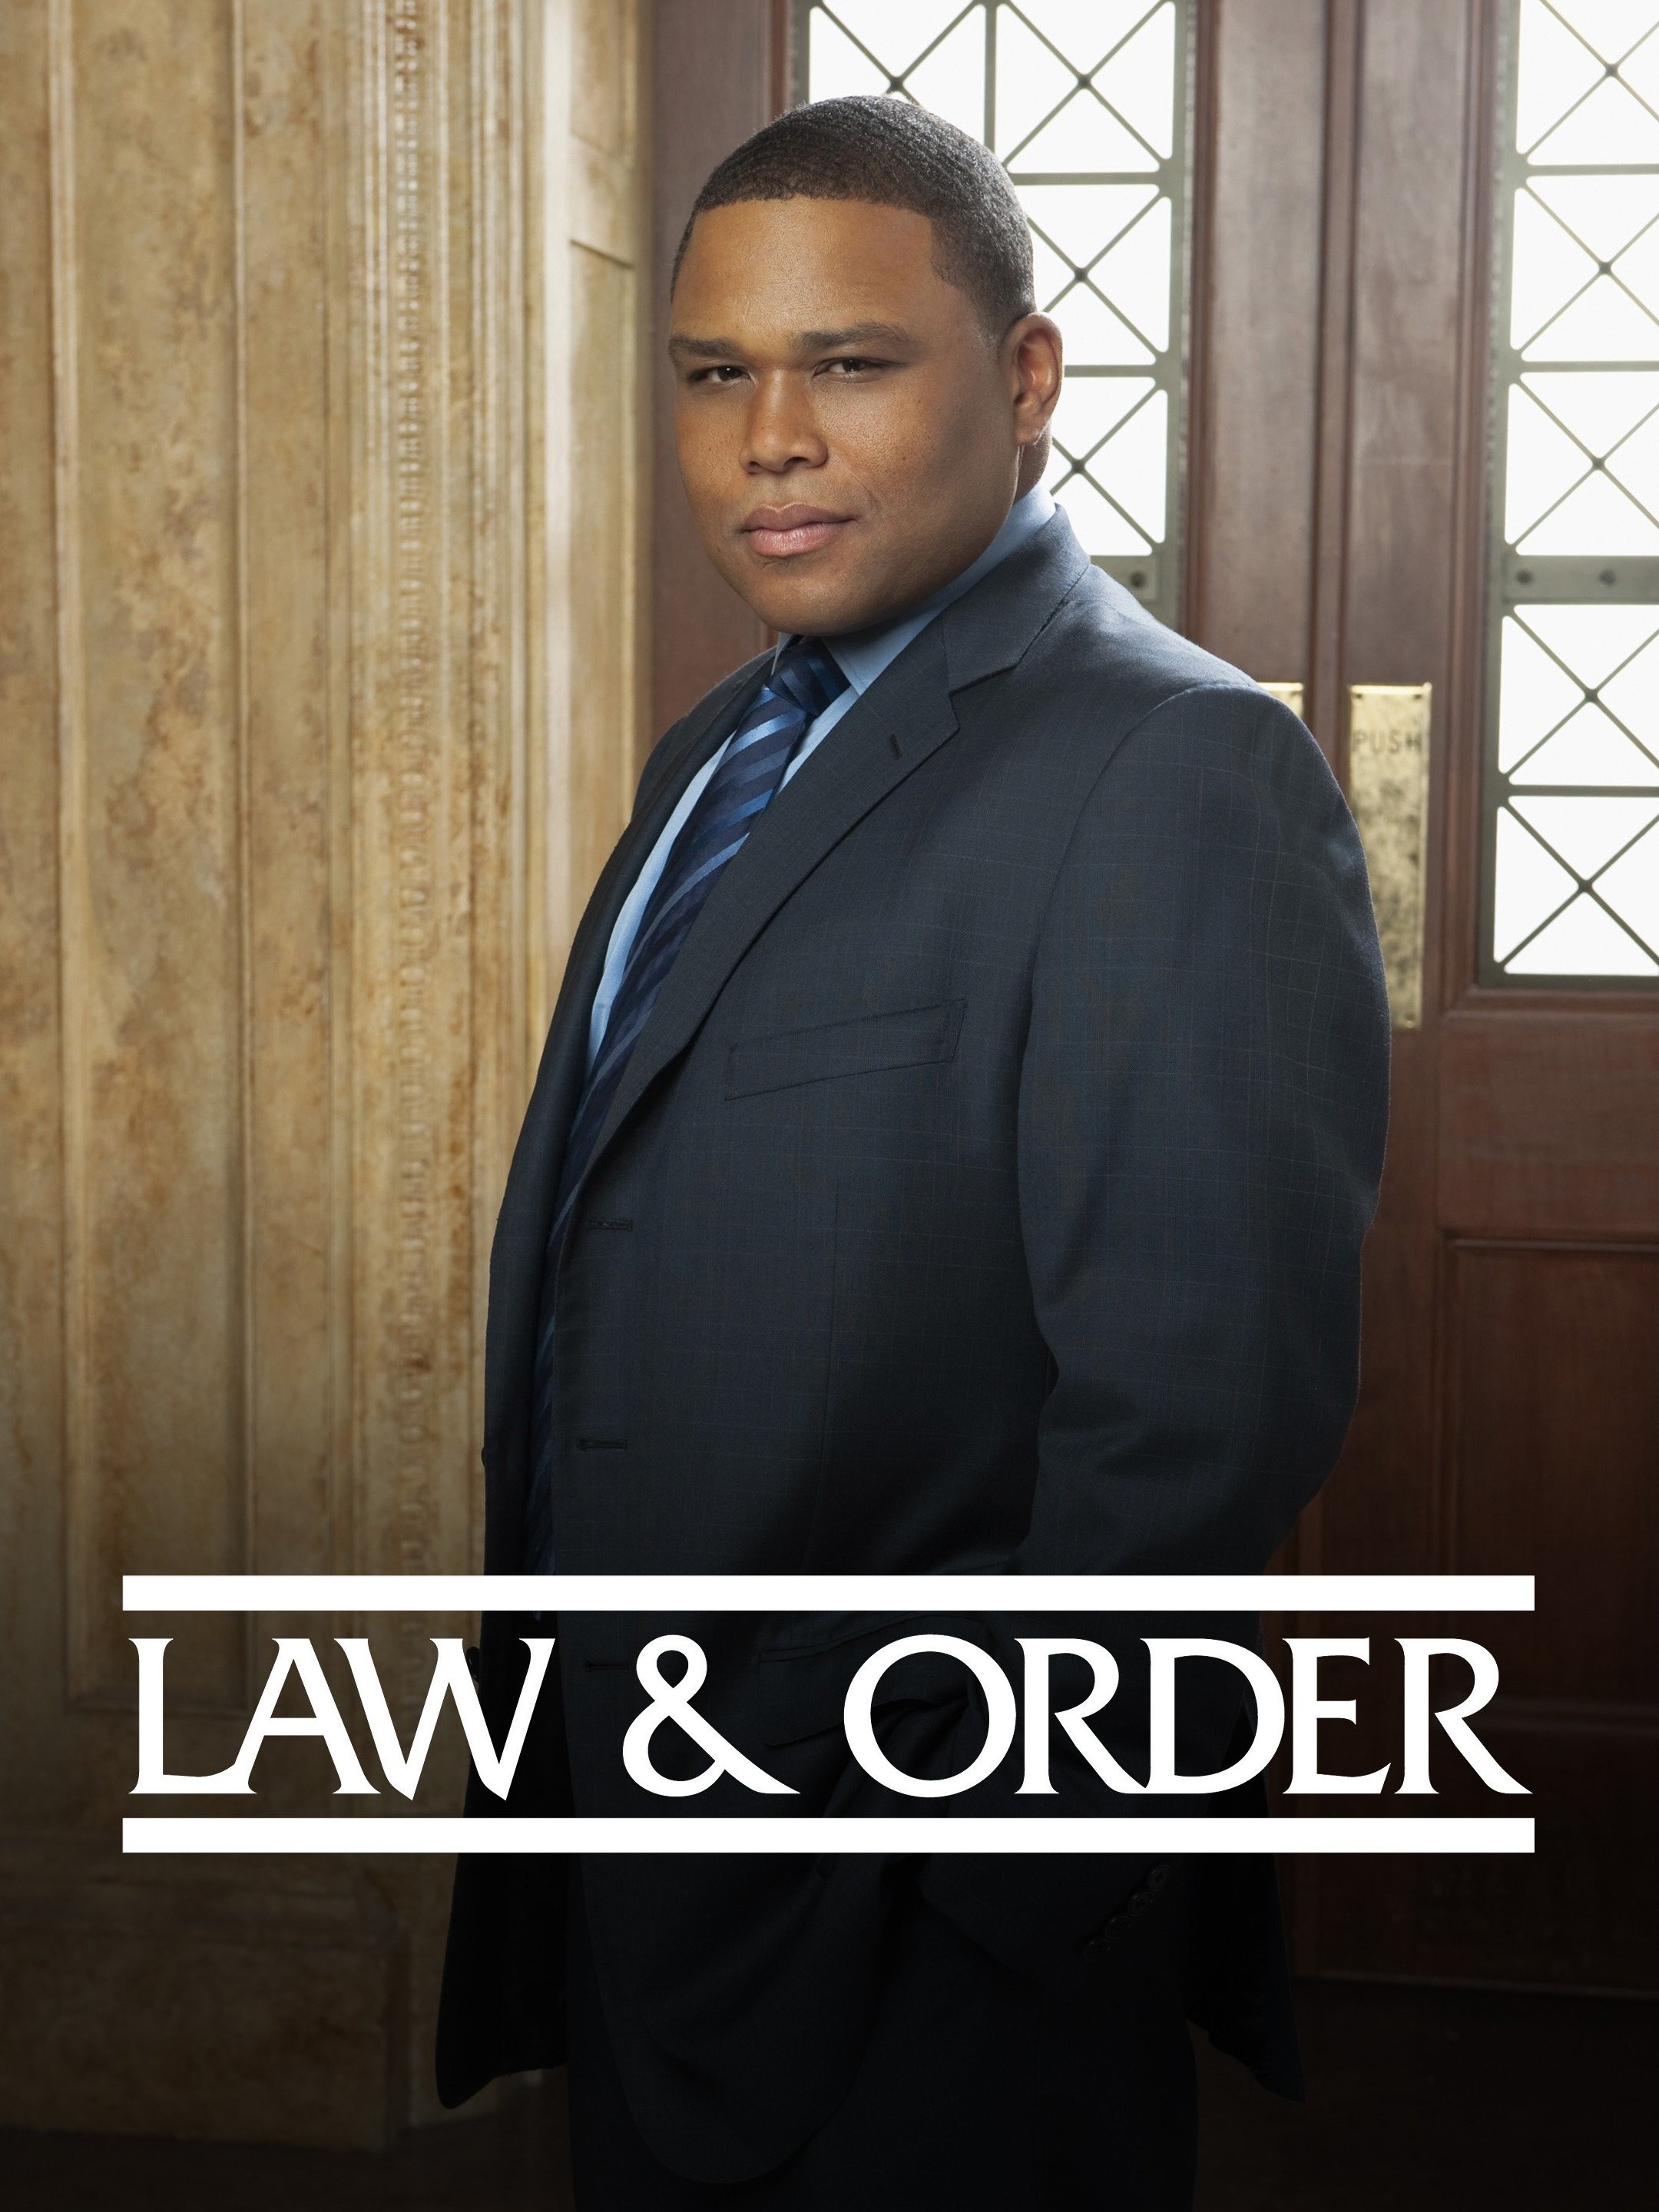 law & order season 16